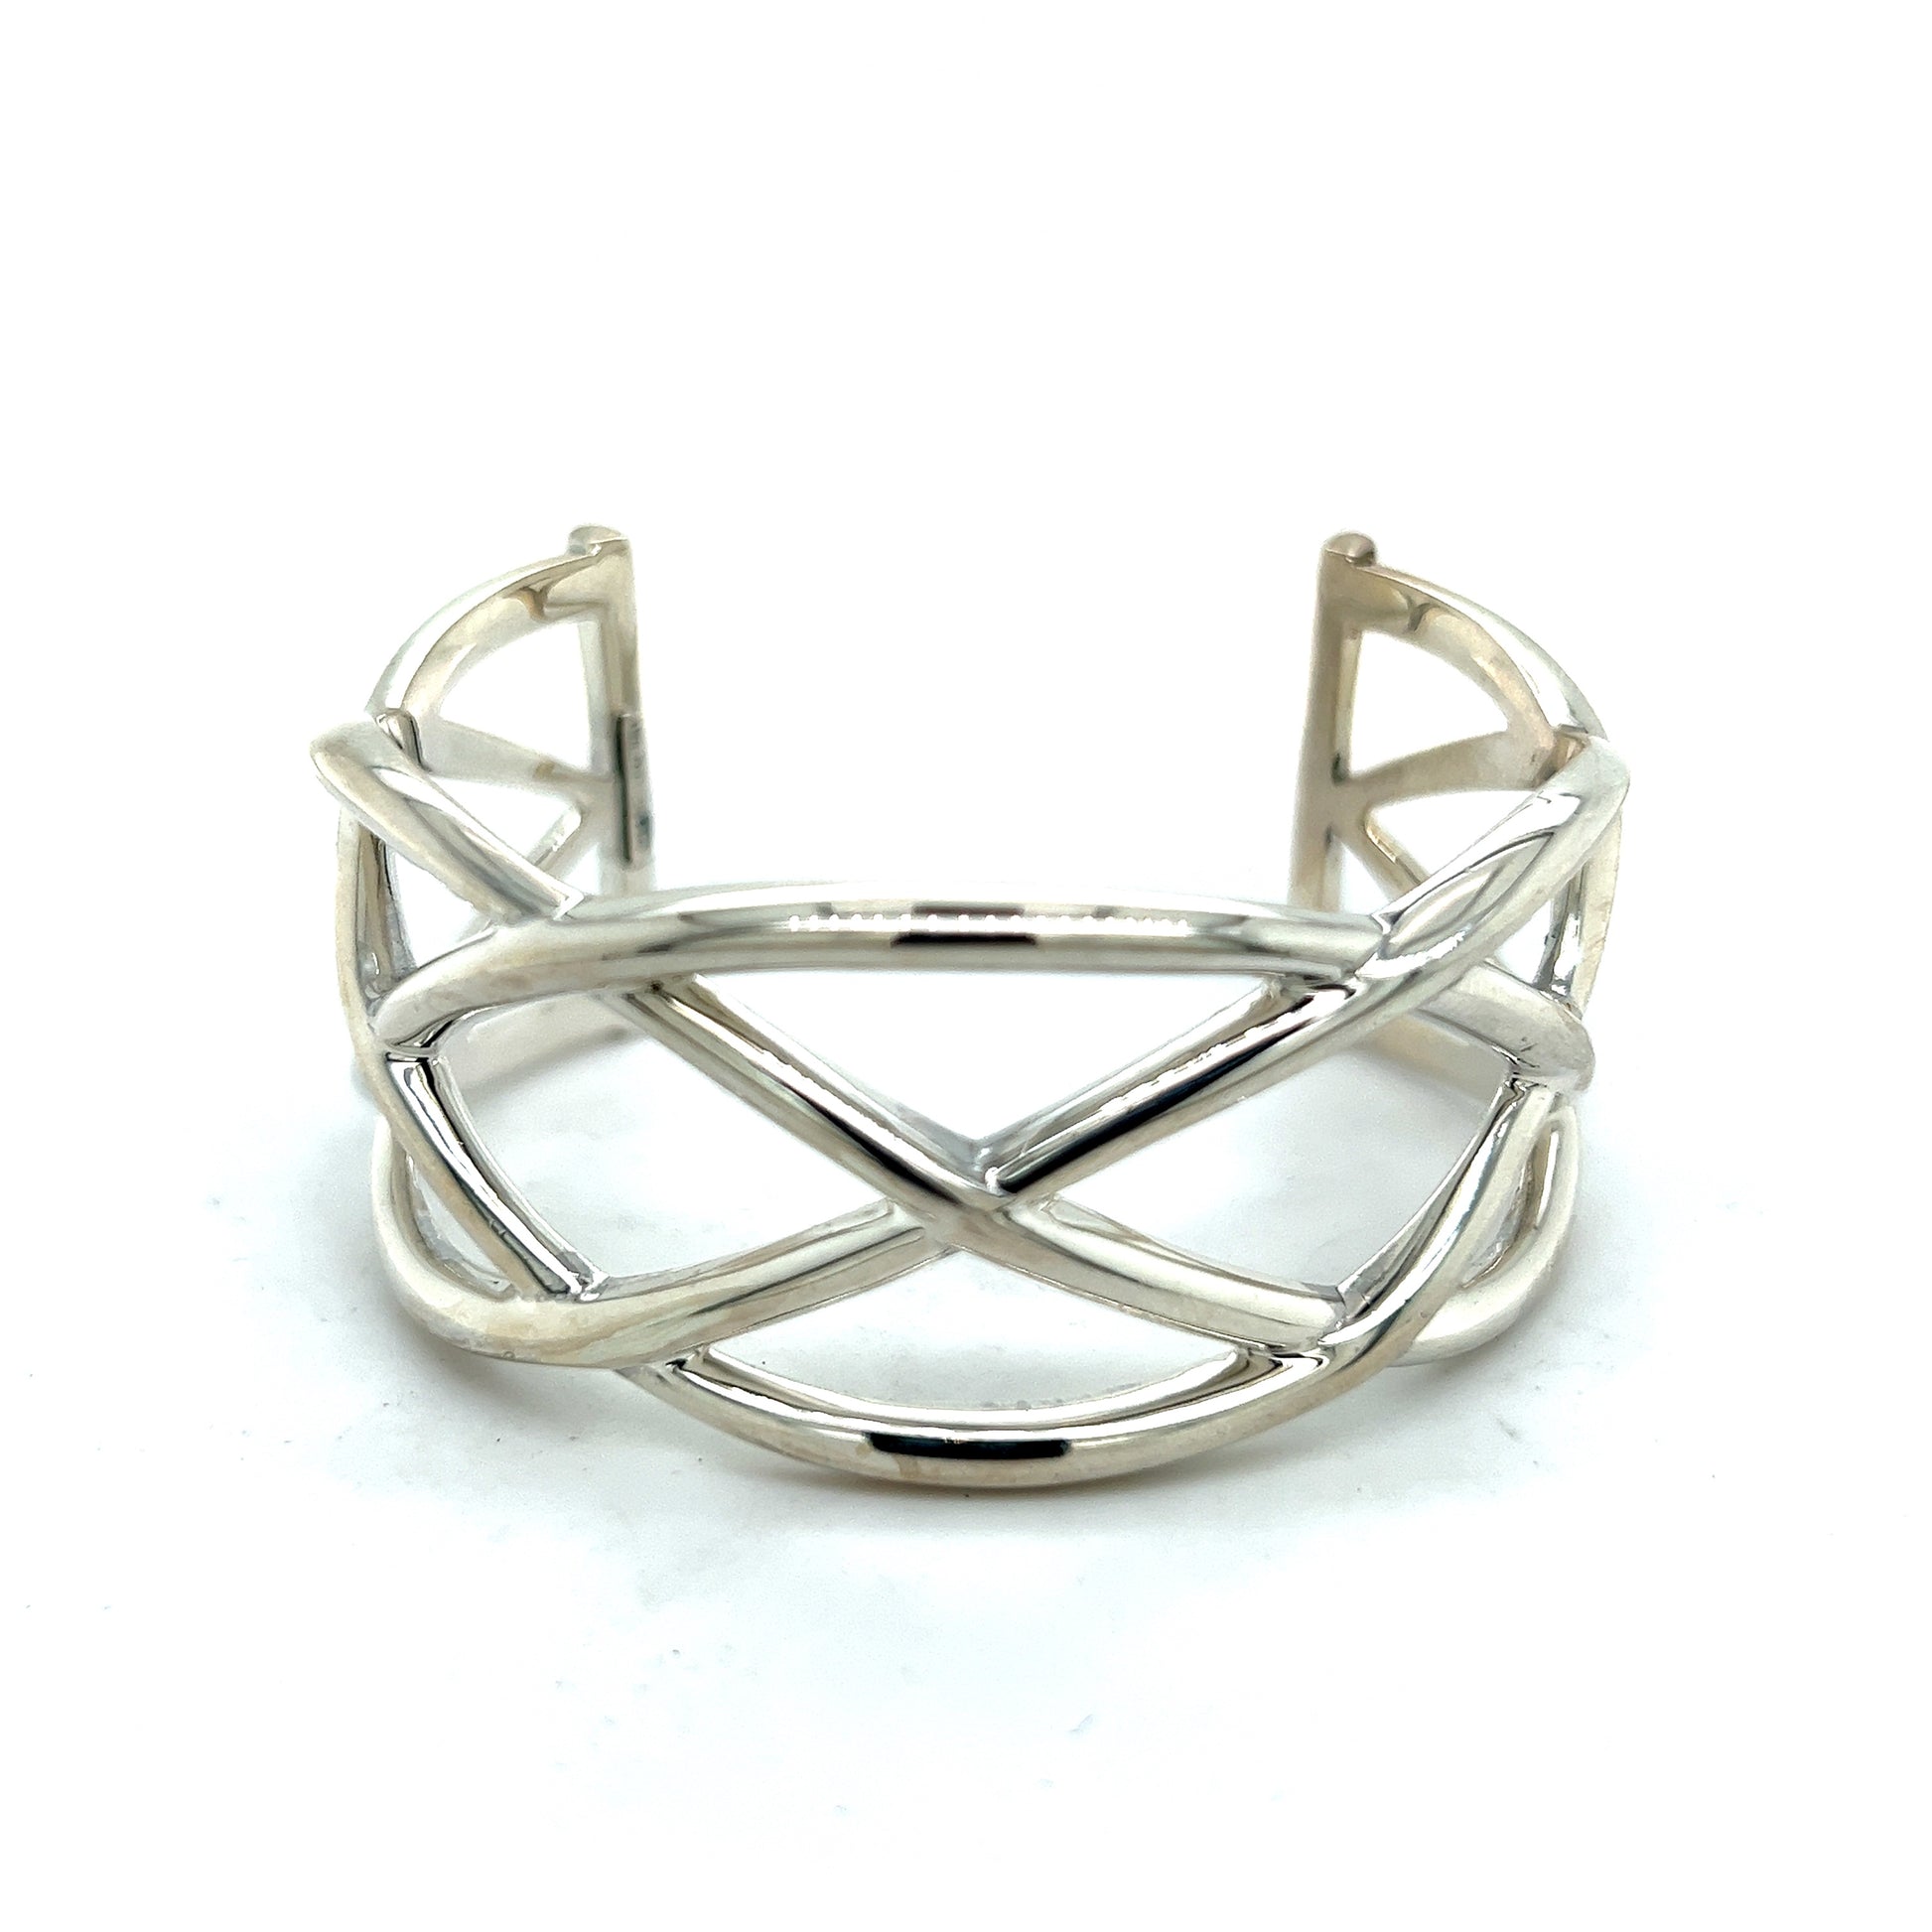 Tiffany & Co Authentic Estate Large Celtic Knot Cuff Bracelet 7.5" Medium Silver TIF373 - Certified Fine Jewelry